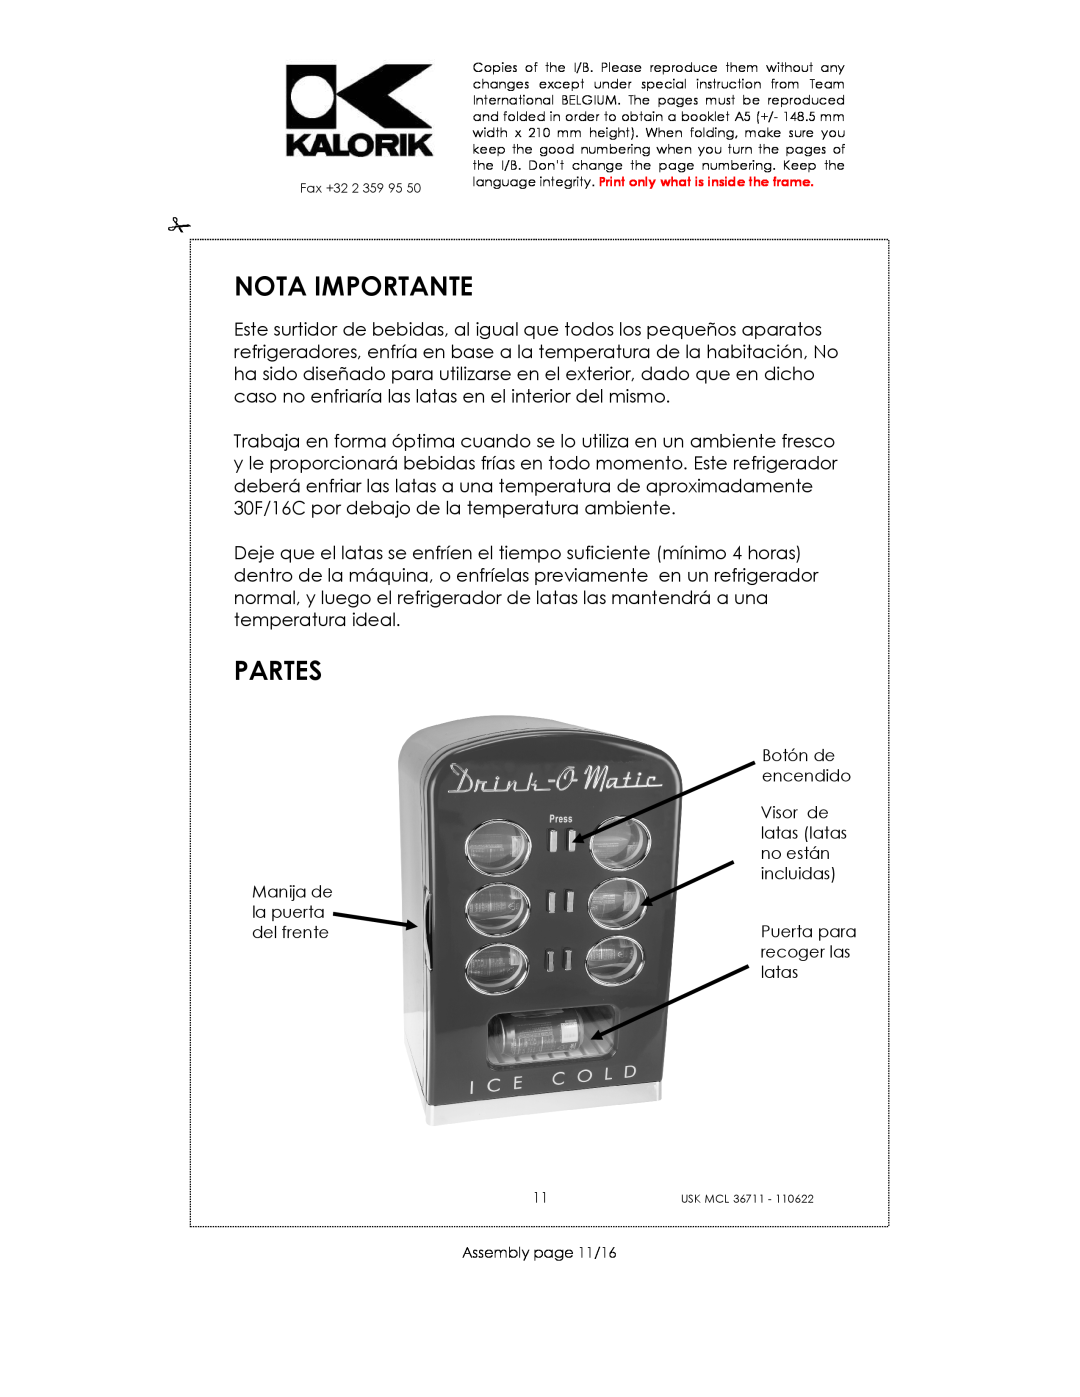 Kalorik USK MCL 36711 manual Nota Importante, Partes, Botón de encendido Visor de latas latas no están incluidas 